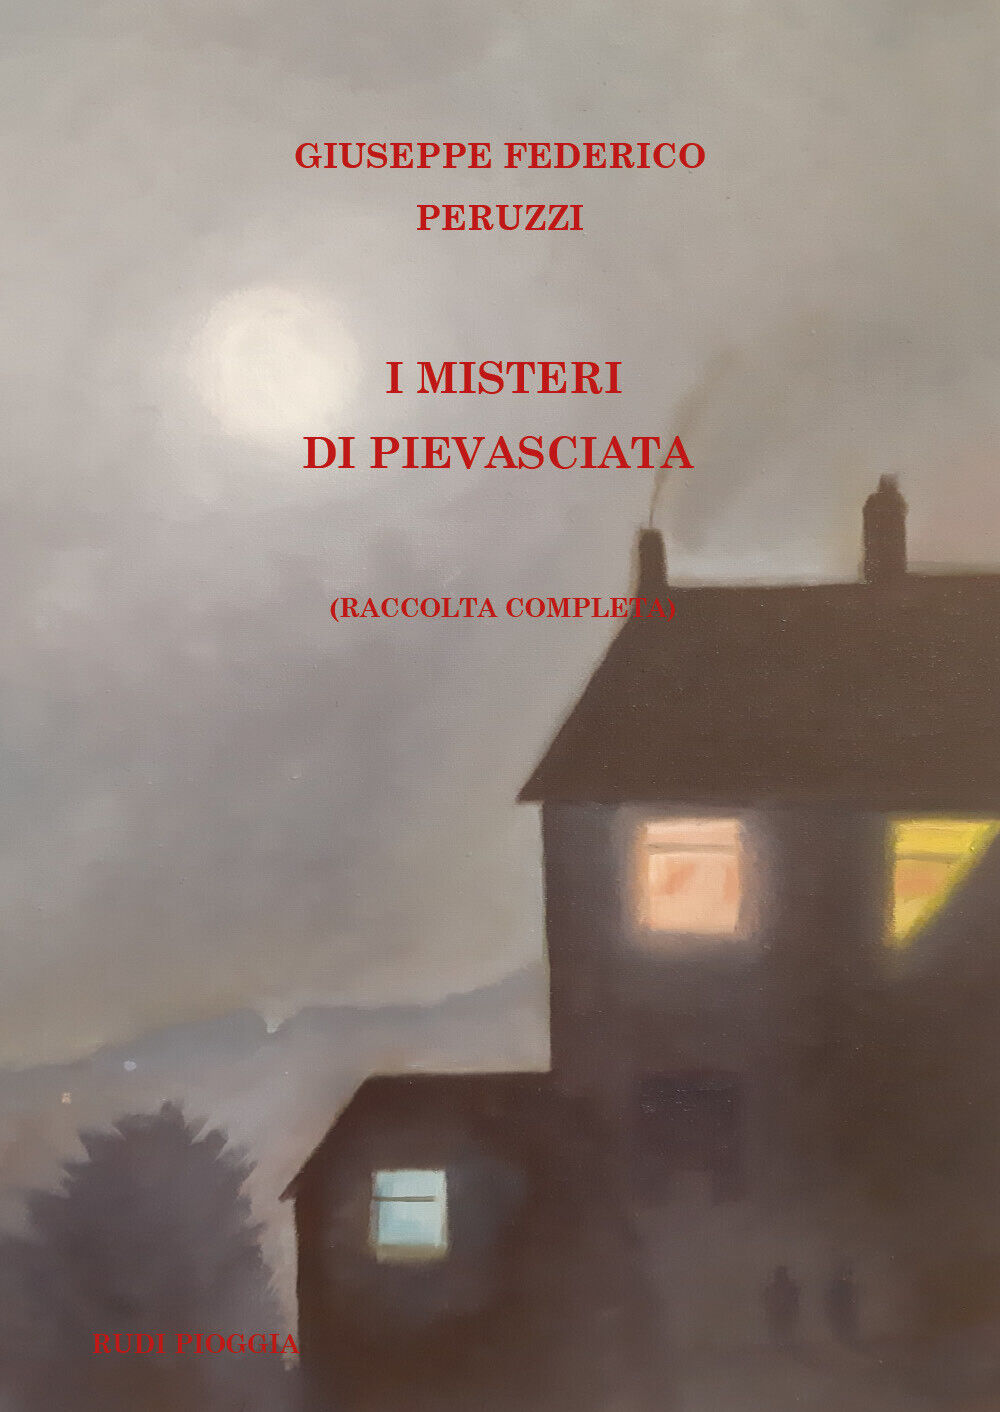 I Misteri di Pievasciata (raccolta completa) di Giuseppe Federico Peruzzi,  2022